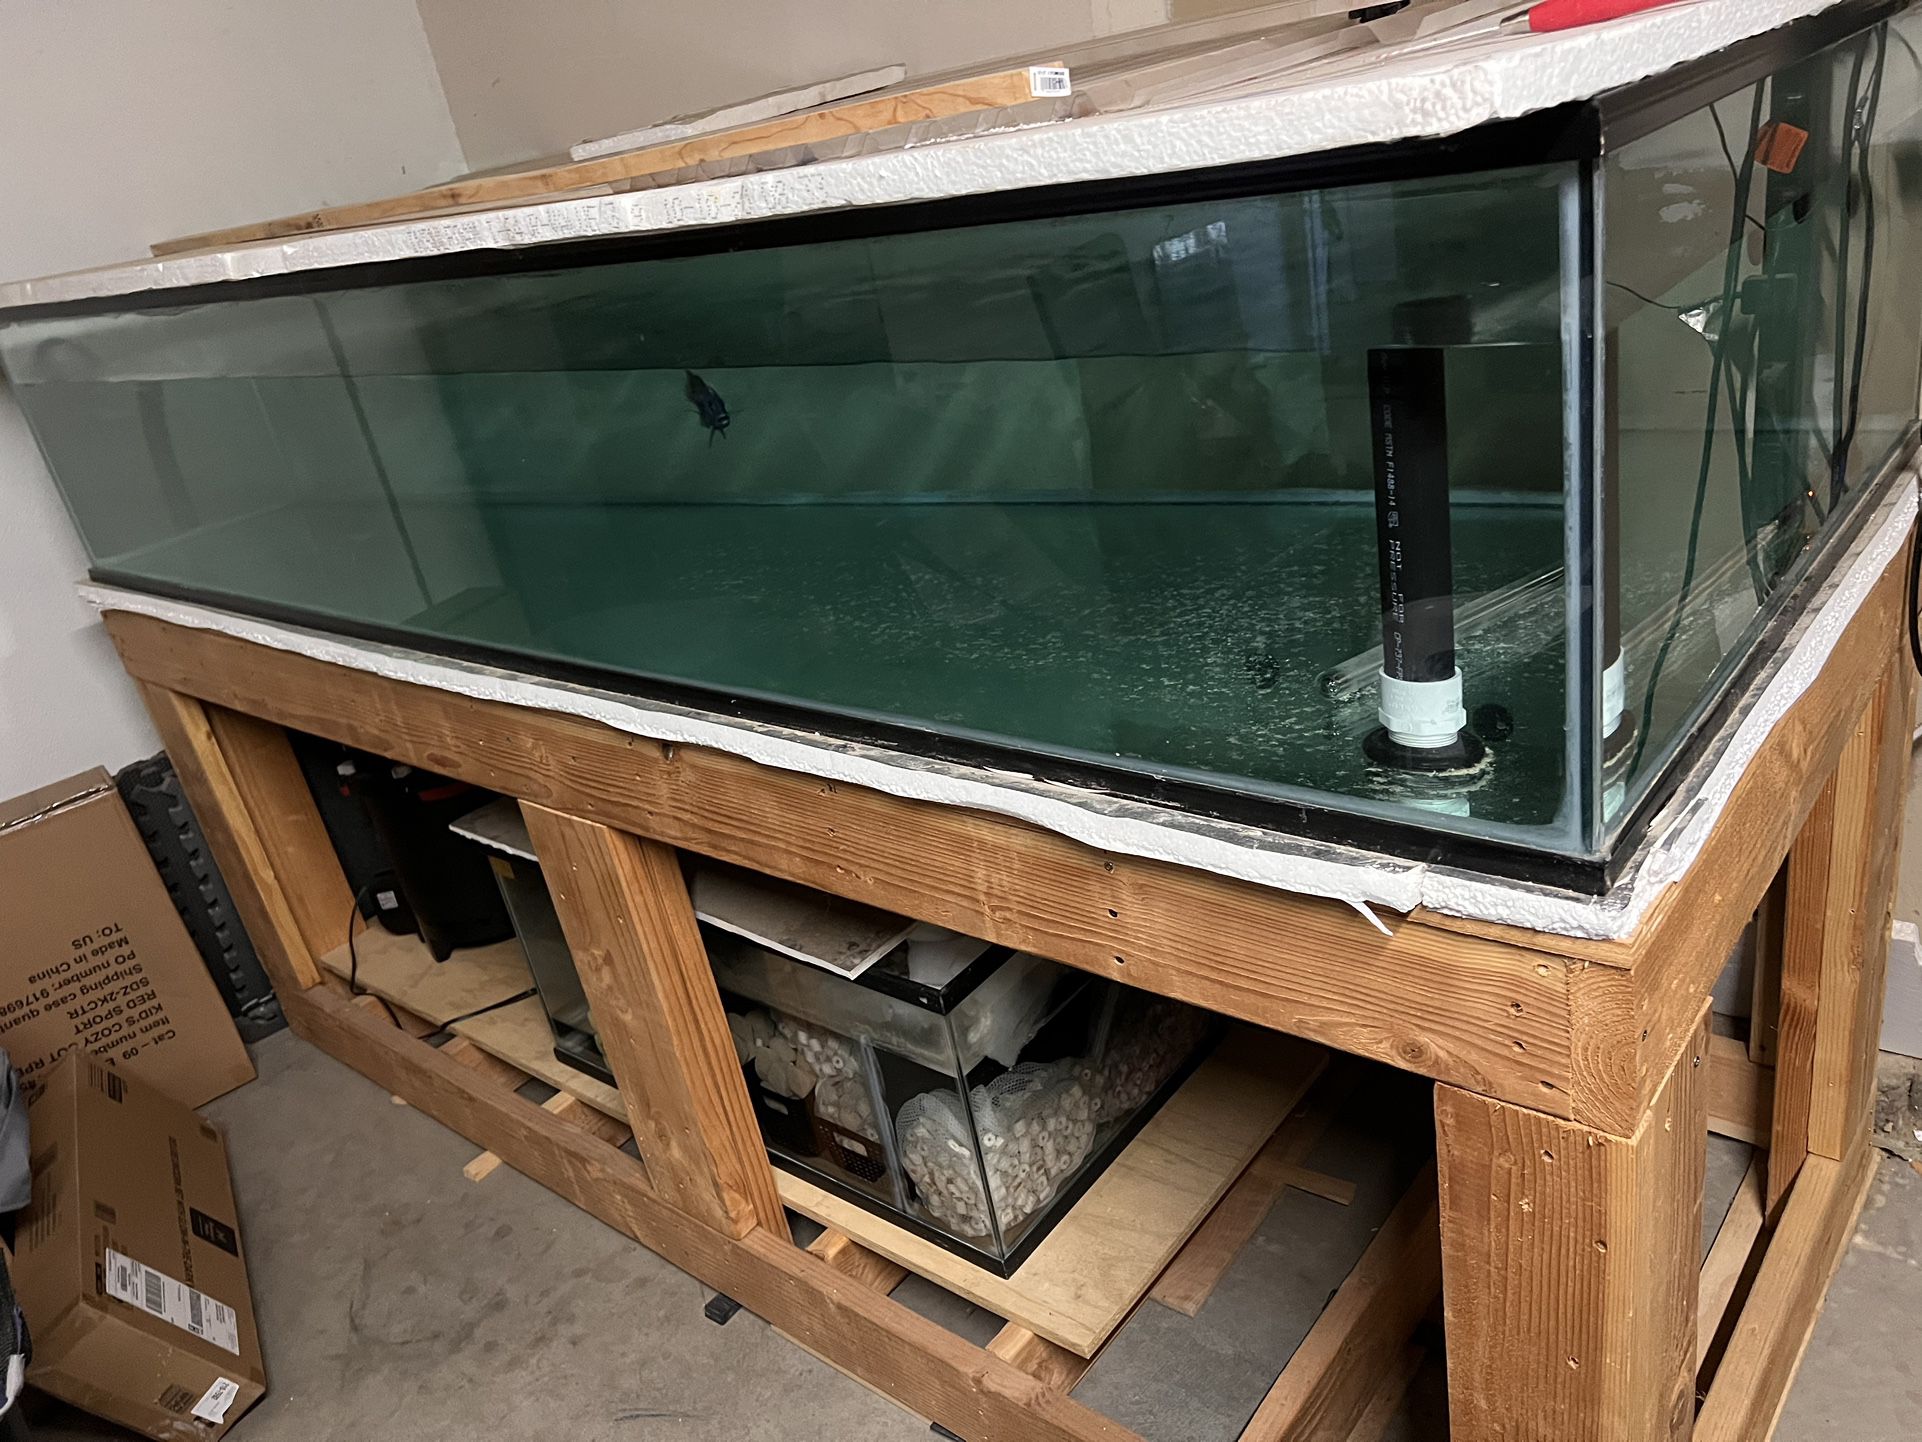 260 gallon Fish tank